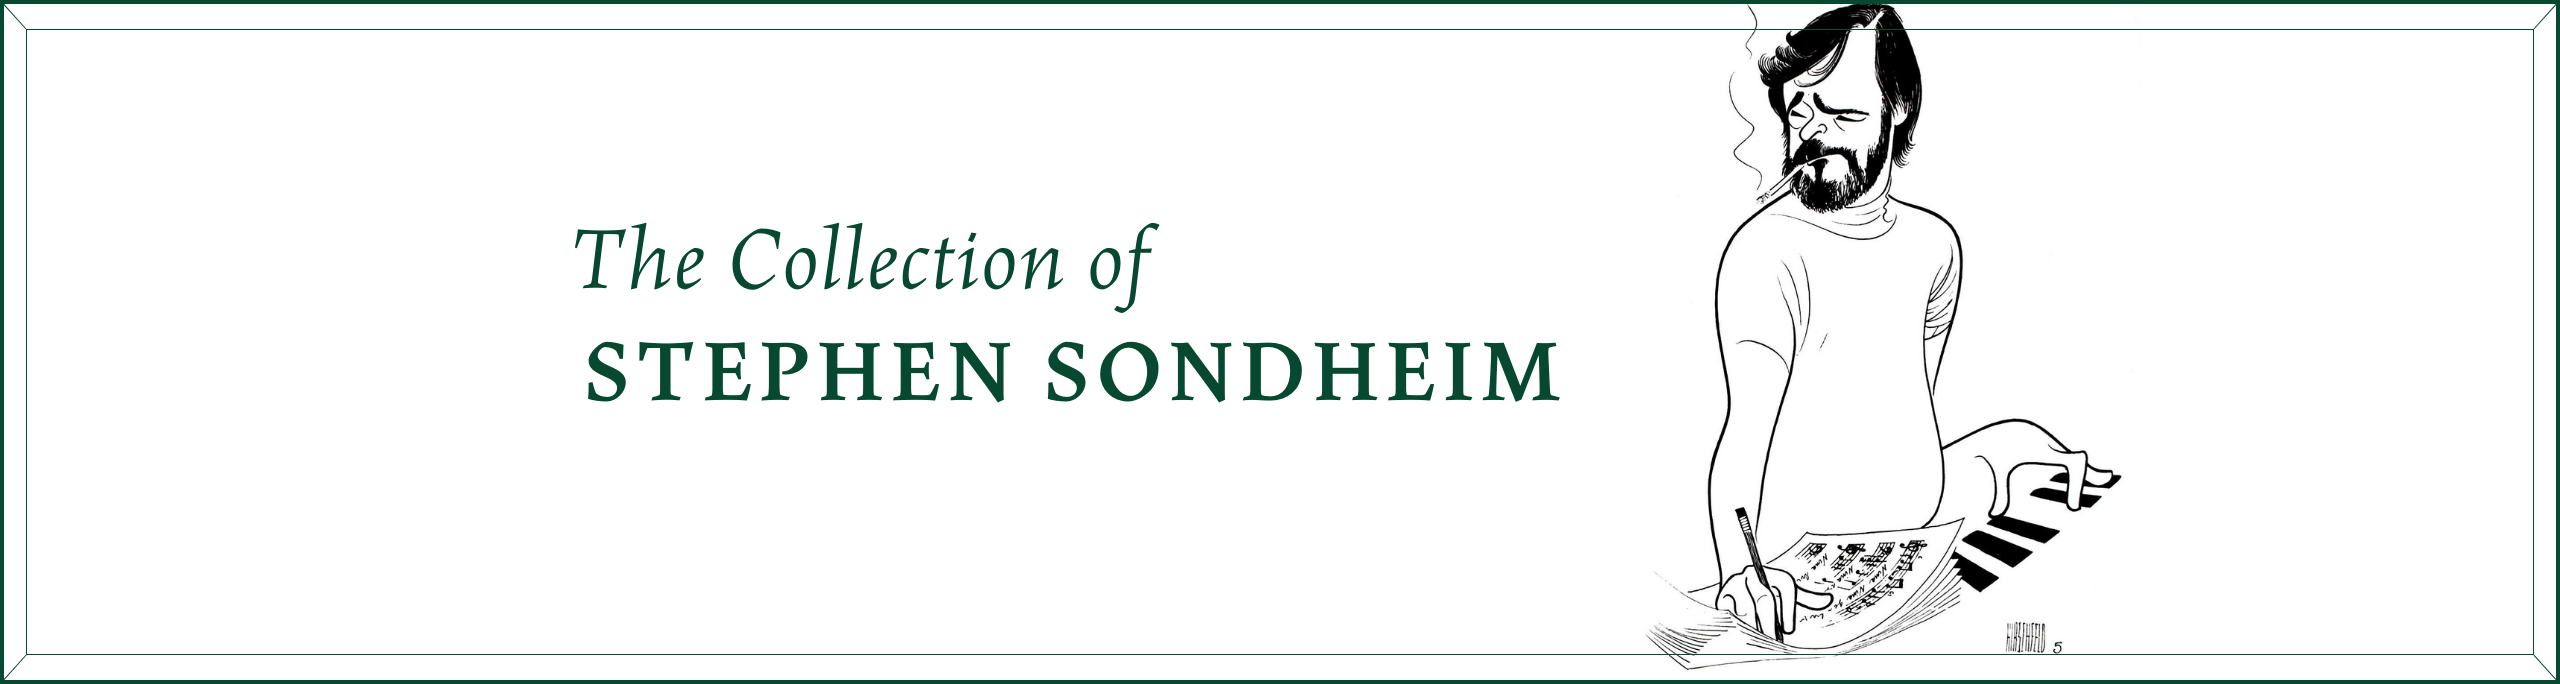 The Collection of Stephen Sondheim